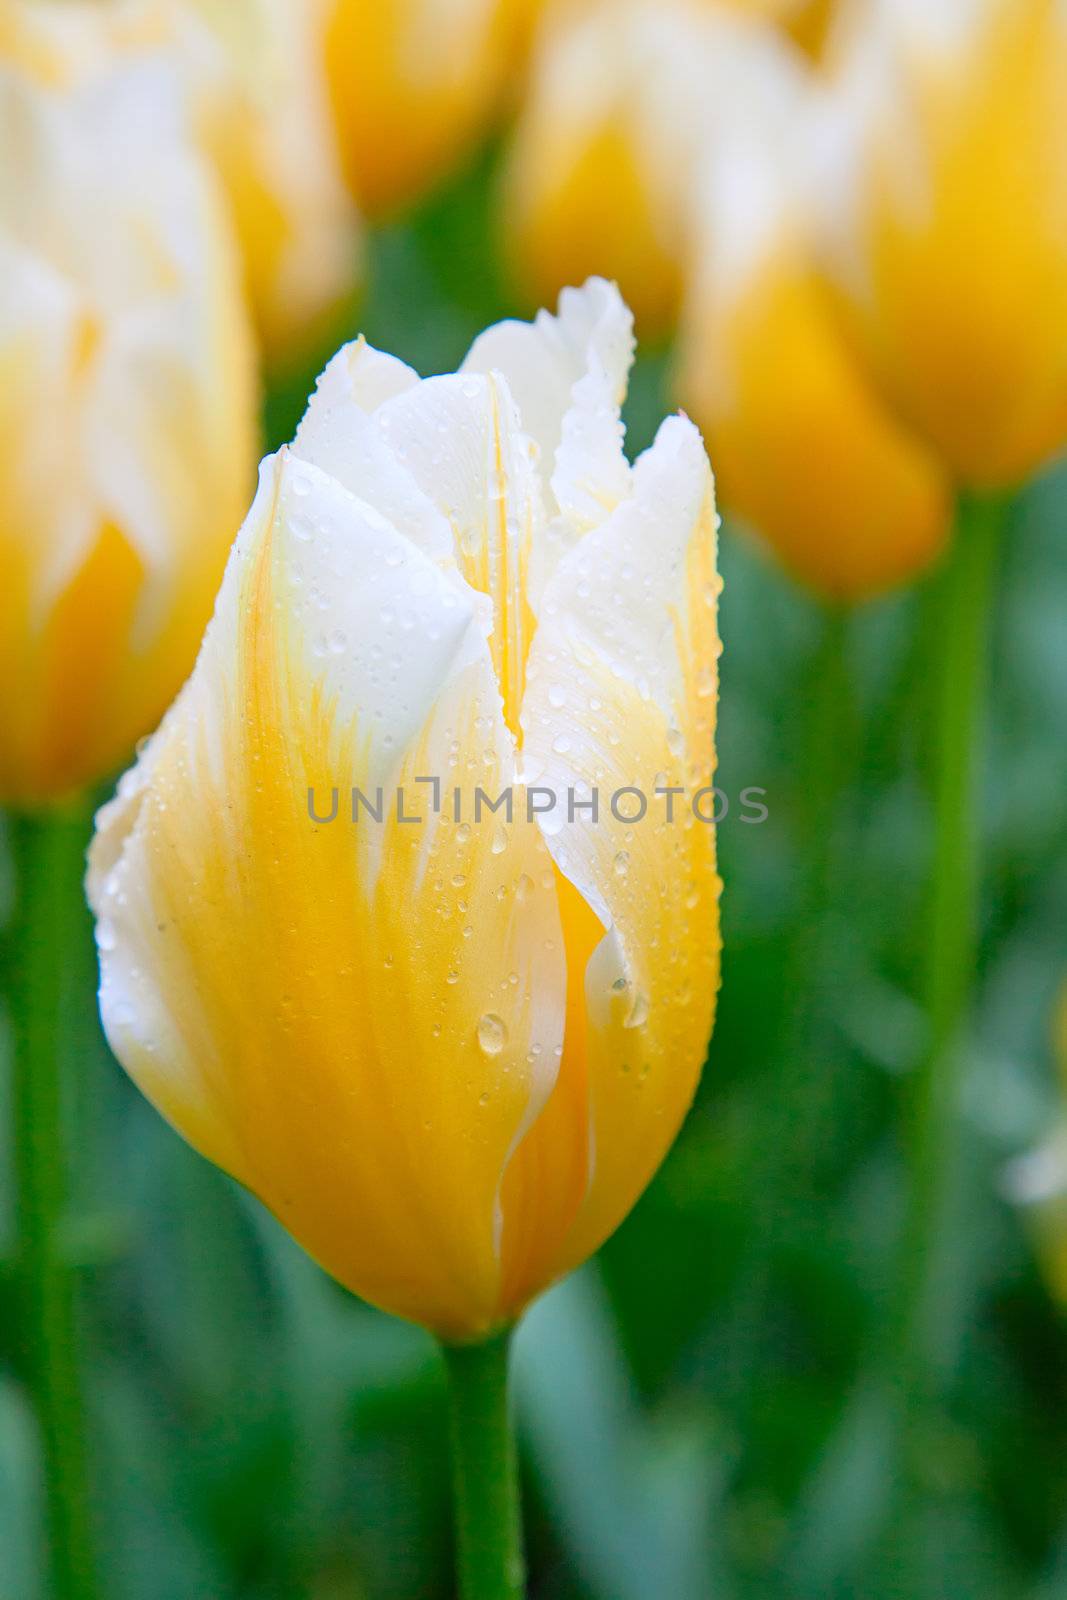 Tulips by swisshippo